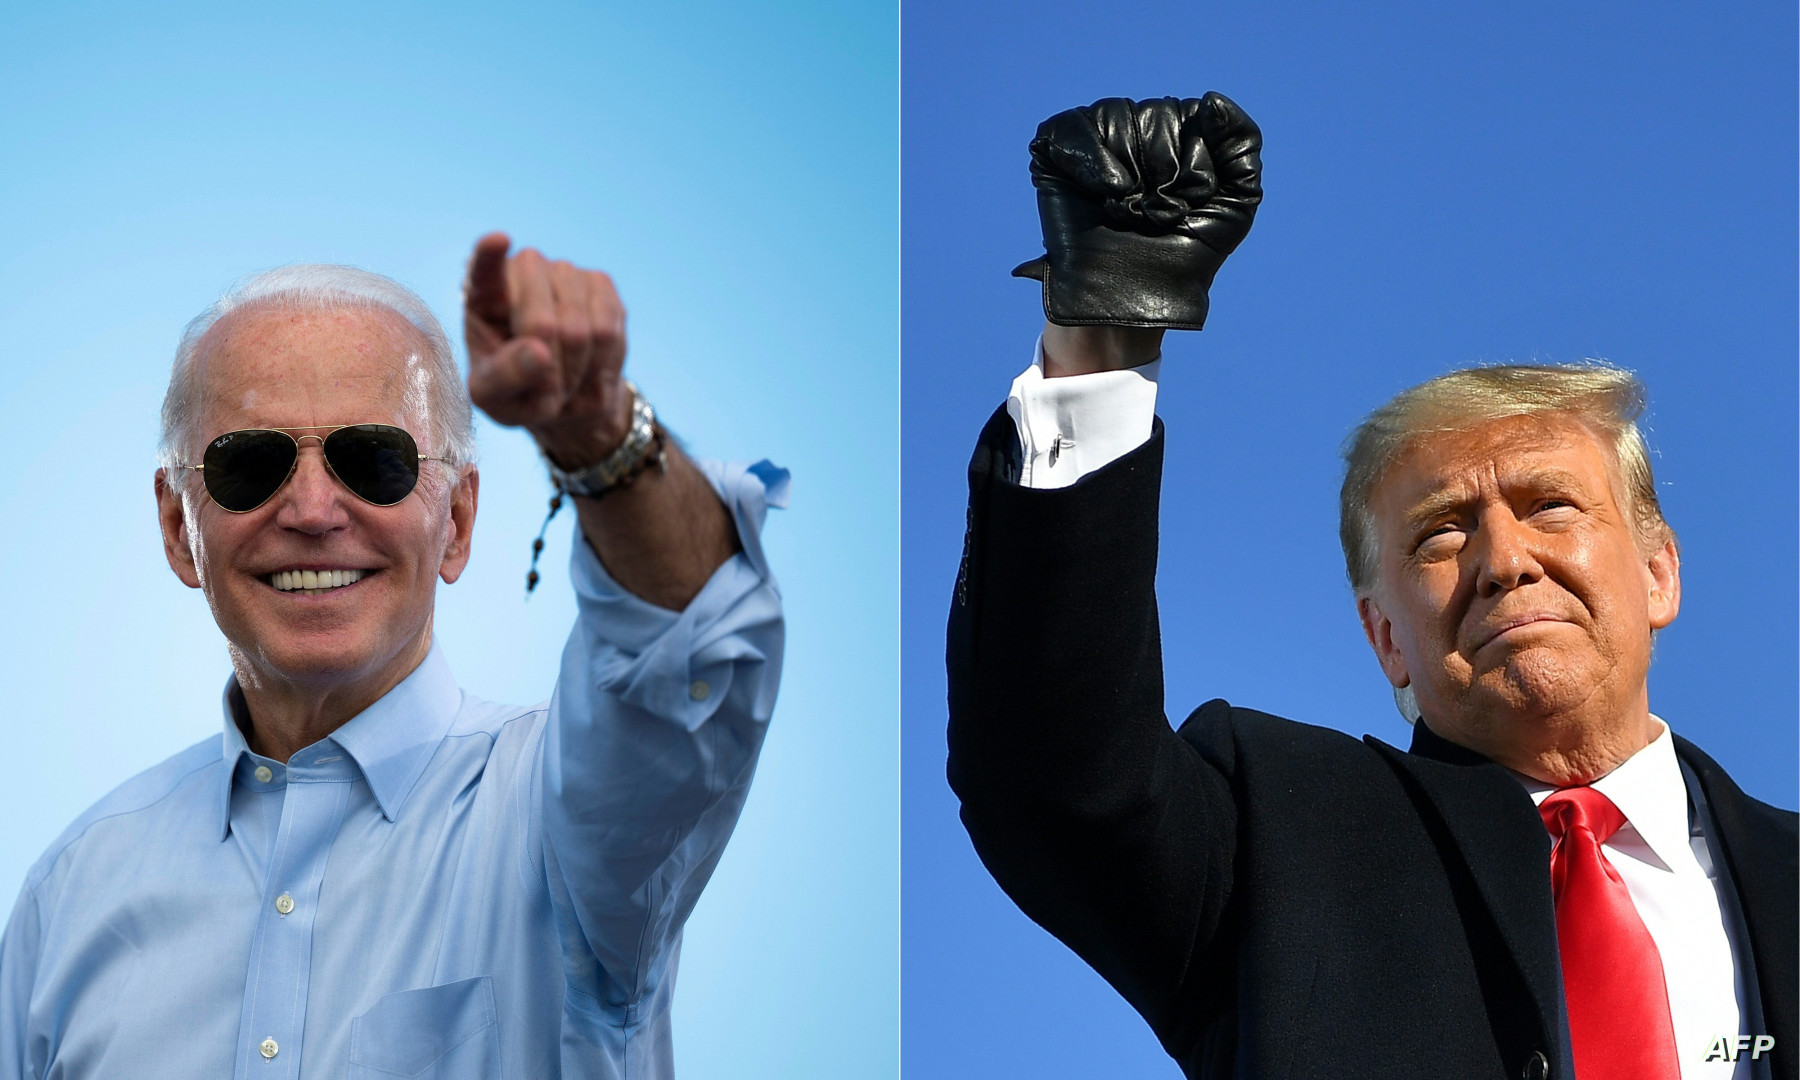 Trump ties Biden's hands: Electoral attacks continue between the candidates